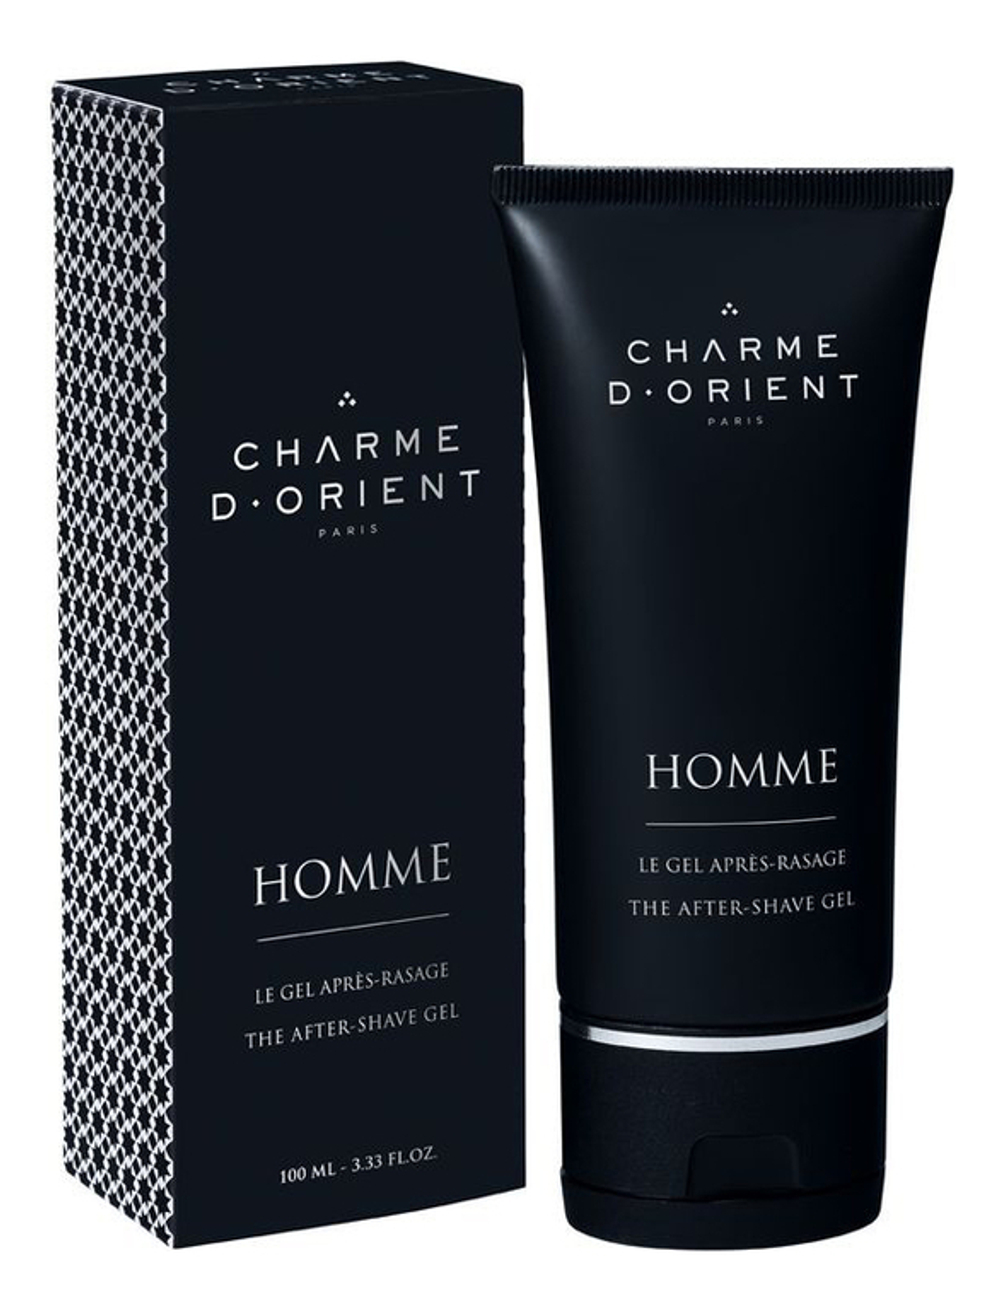 CHARME D'ORIENT Гель после бритья (мужская линия)  HOMME - Le gel apres-rasage (Шарм ди Ориент) 100 мл